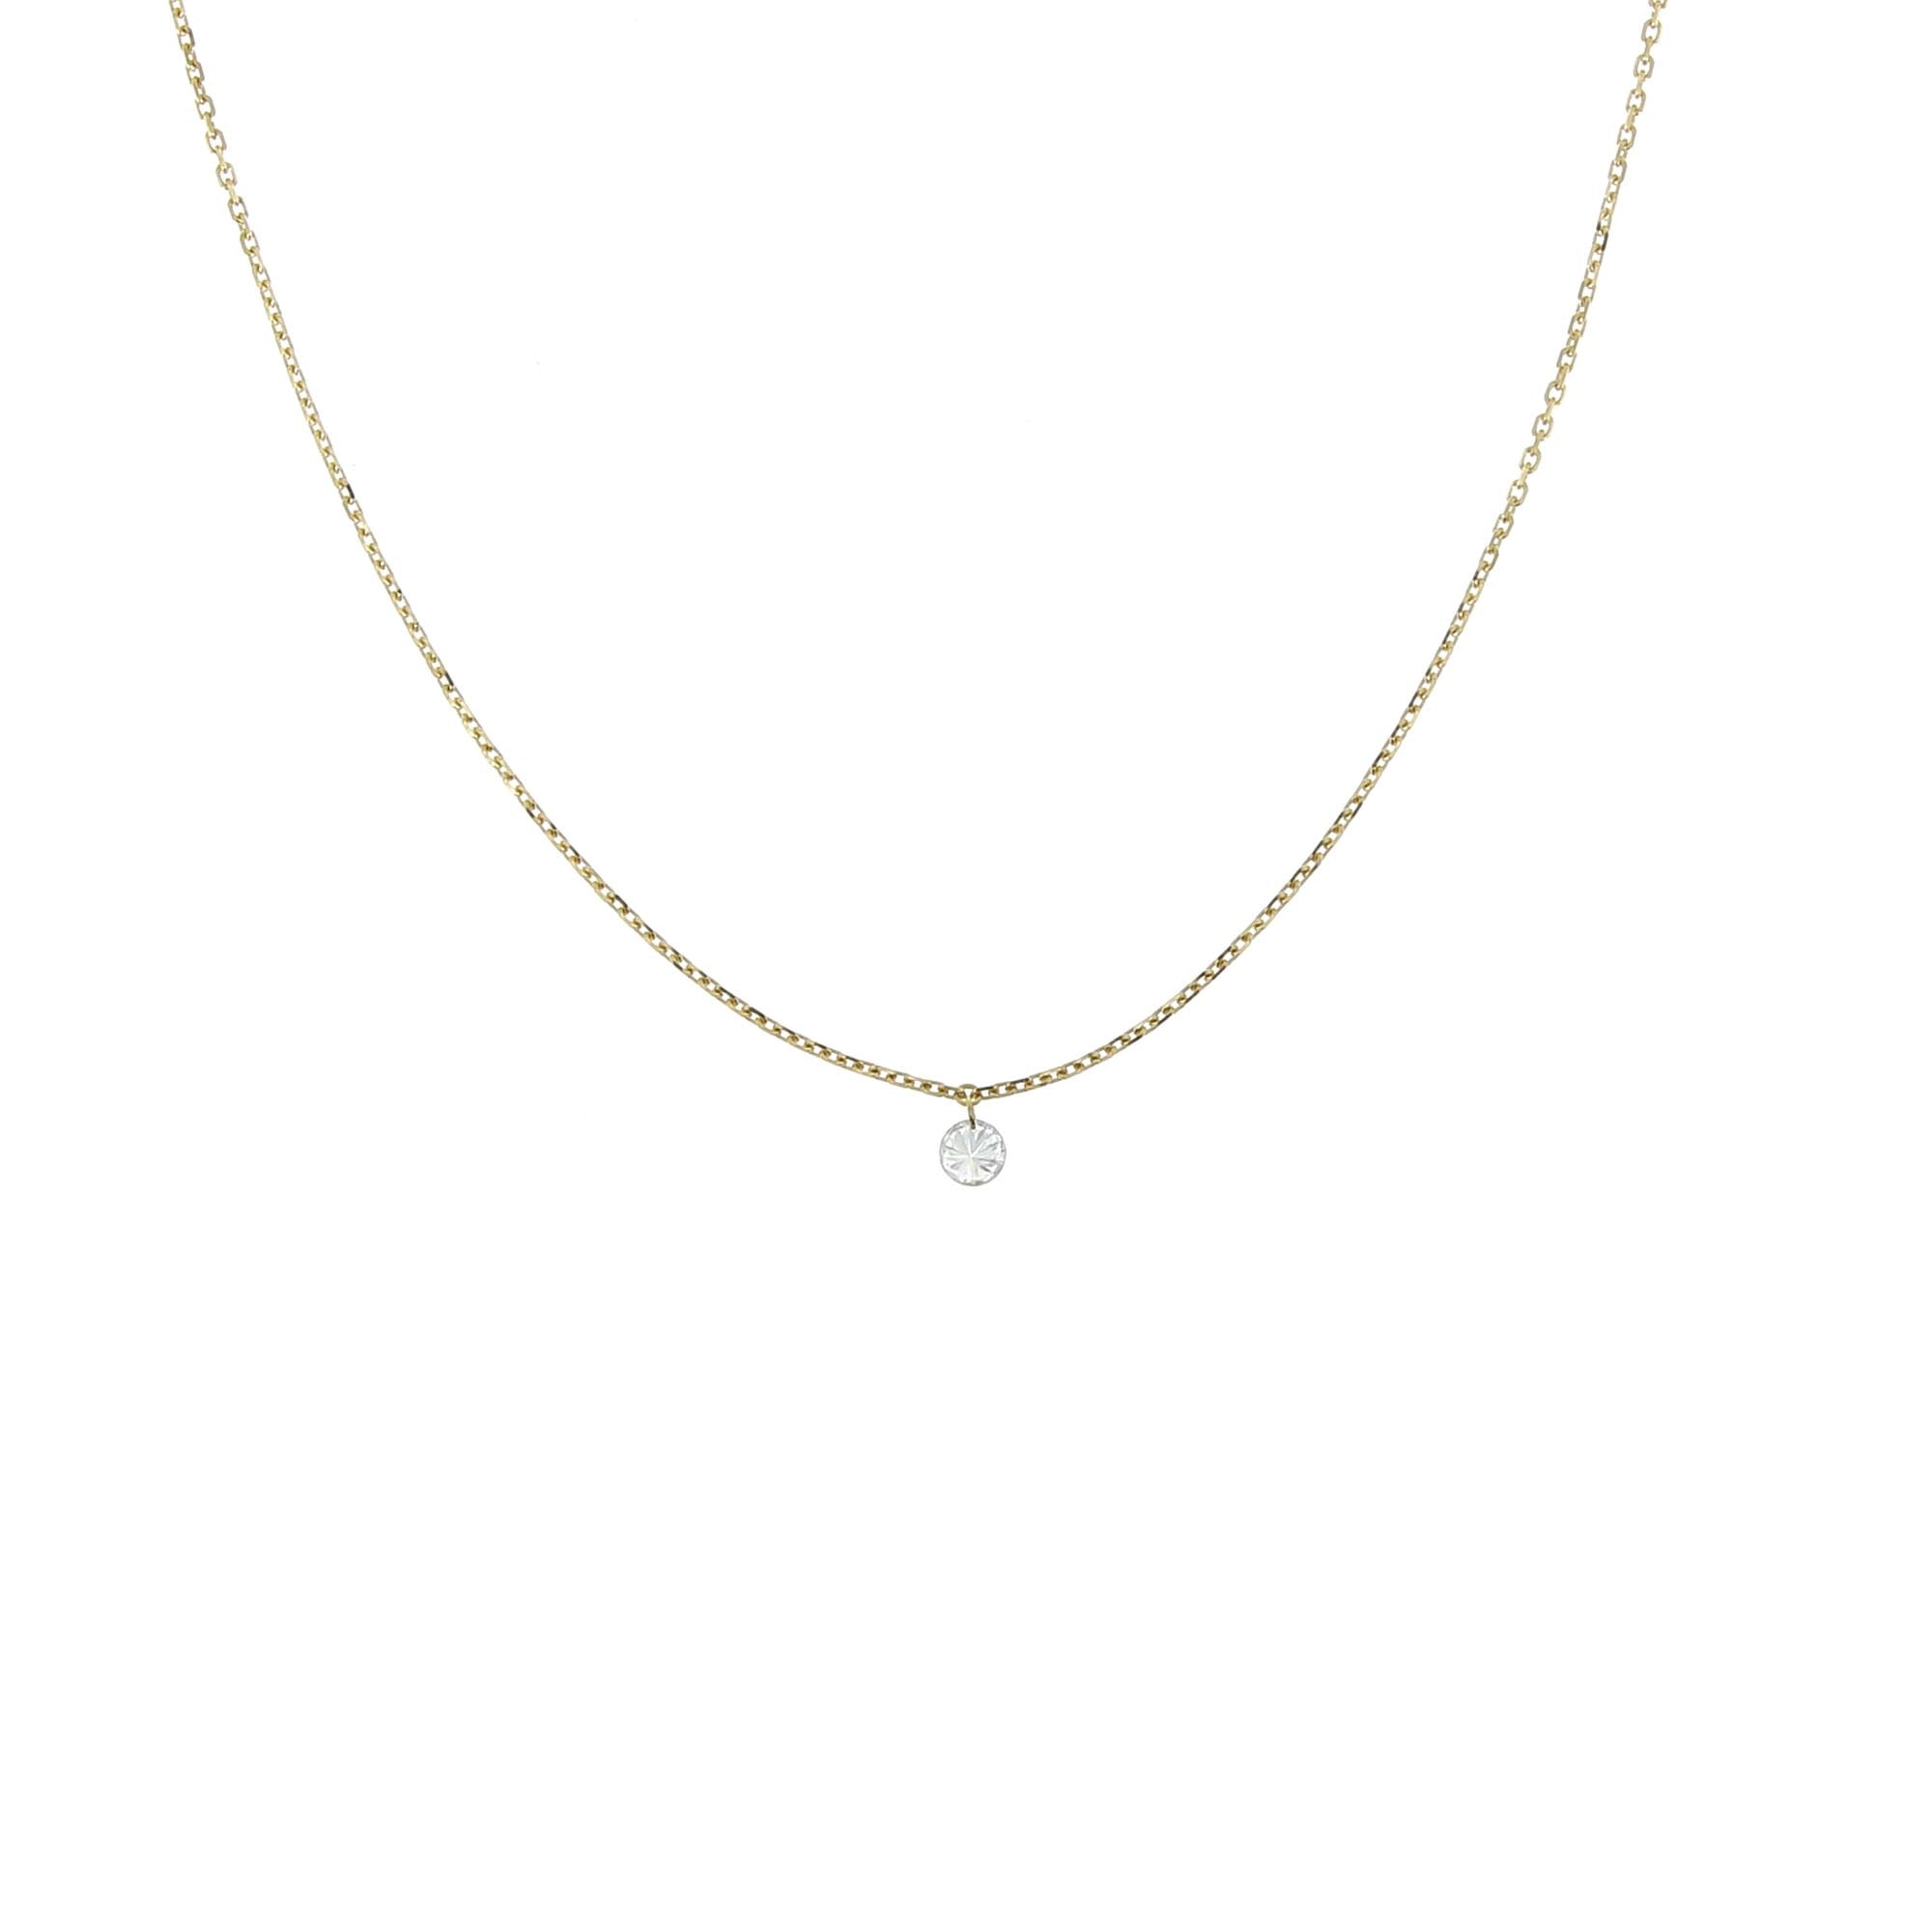 3.5mm Yellow Gold Diamond Necklace 